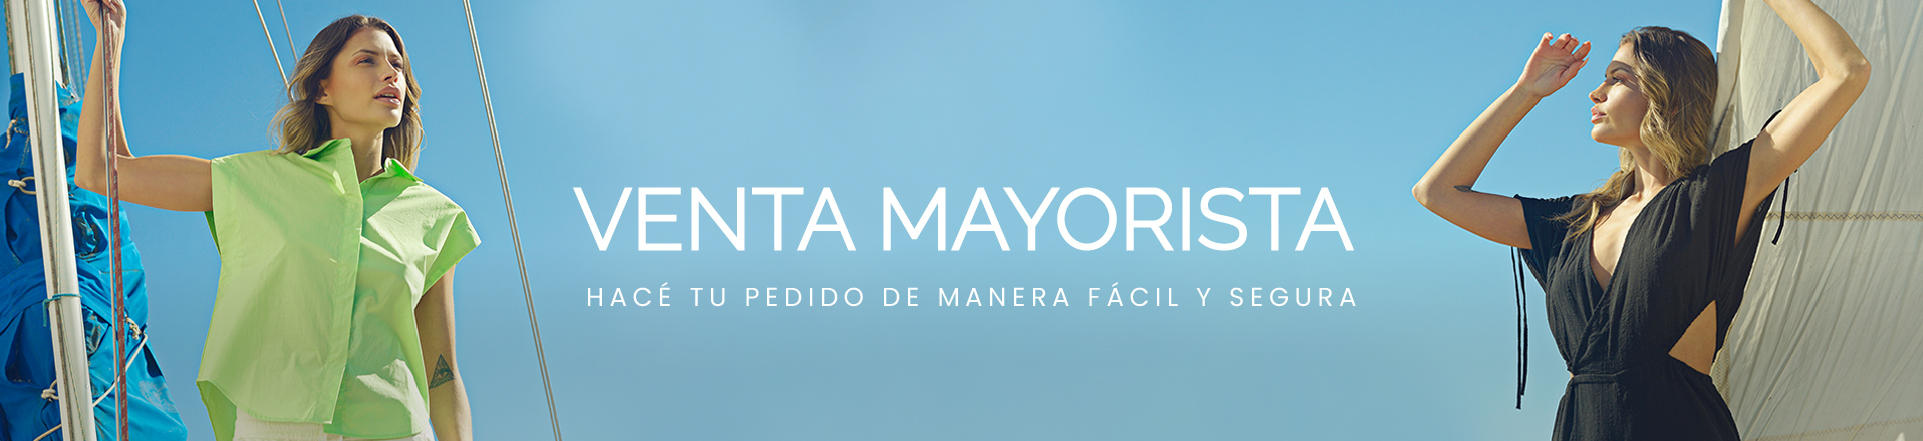 banner mayorista